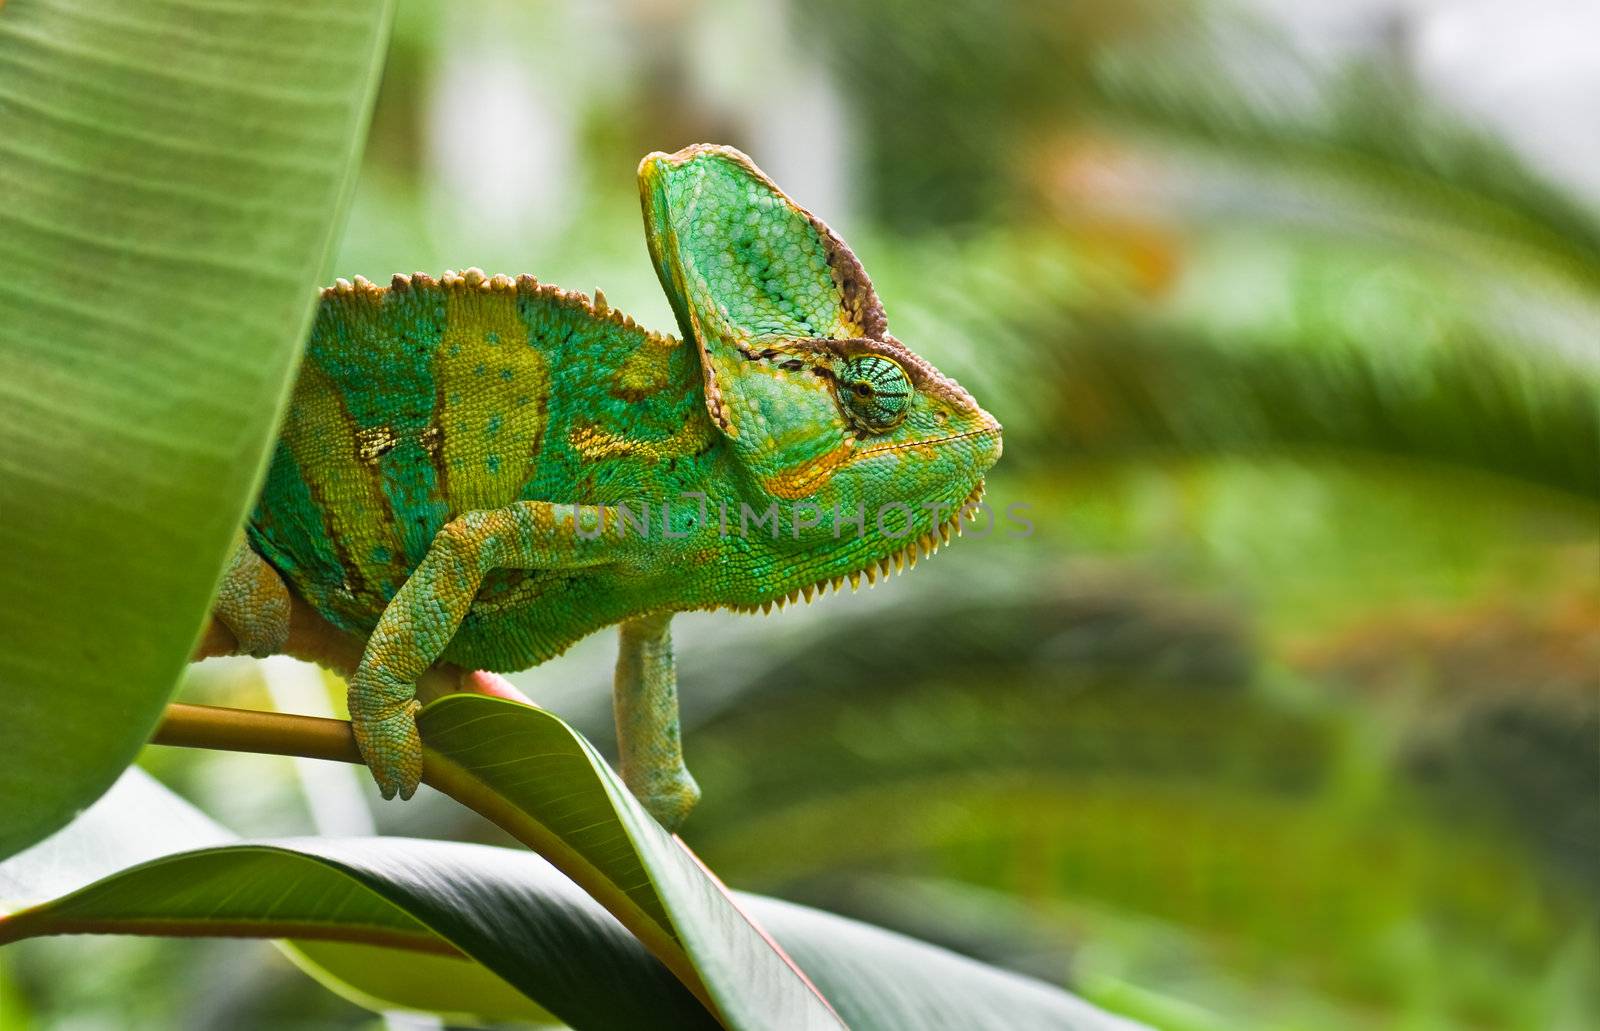 Green Jemenchameleon or Chamaelio calyptratus climbing a tree